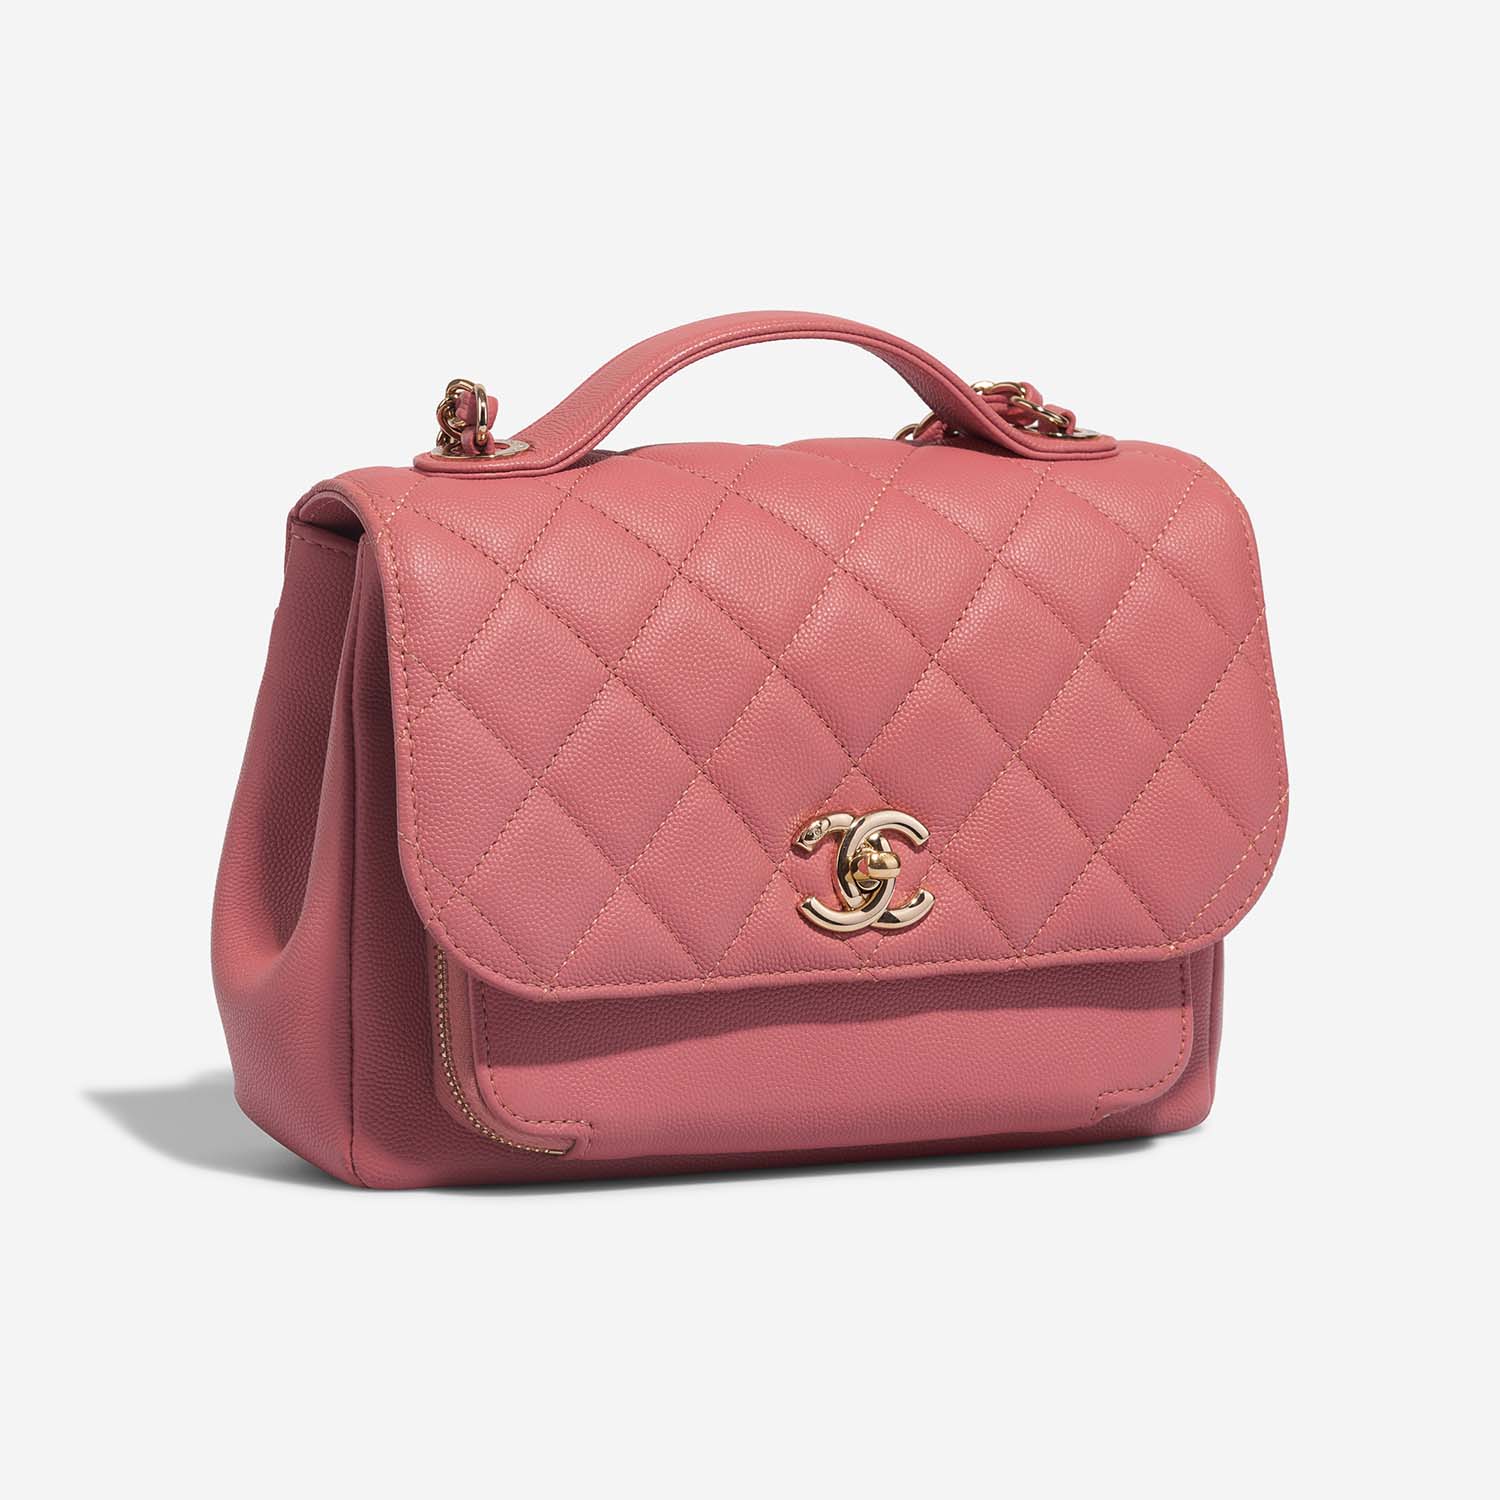 Chanel BusinessAffinity Medium PInk Side Front | Sell your designer bag on Saclab.com